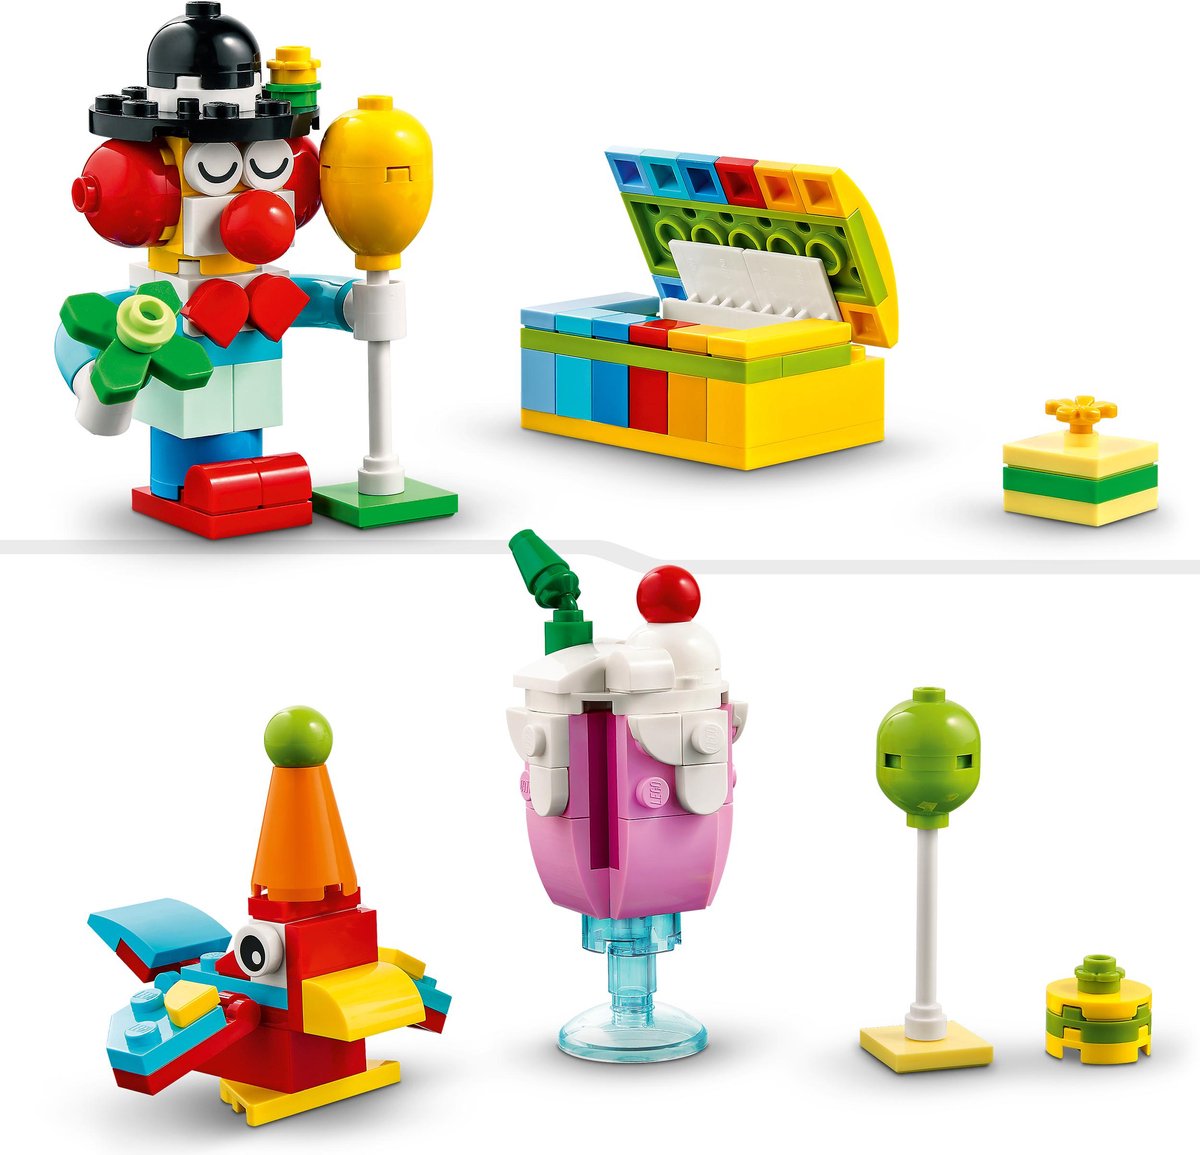 LEGO Classic Creatieve Feestset Bouwpakket - 11029